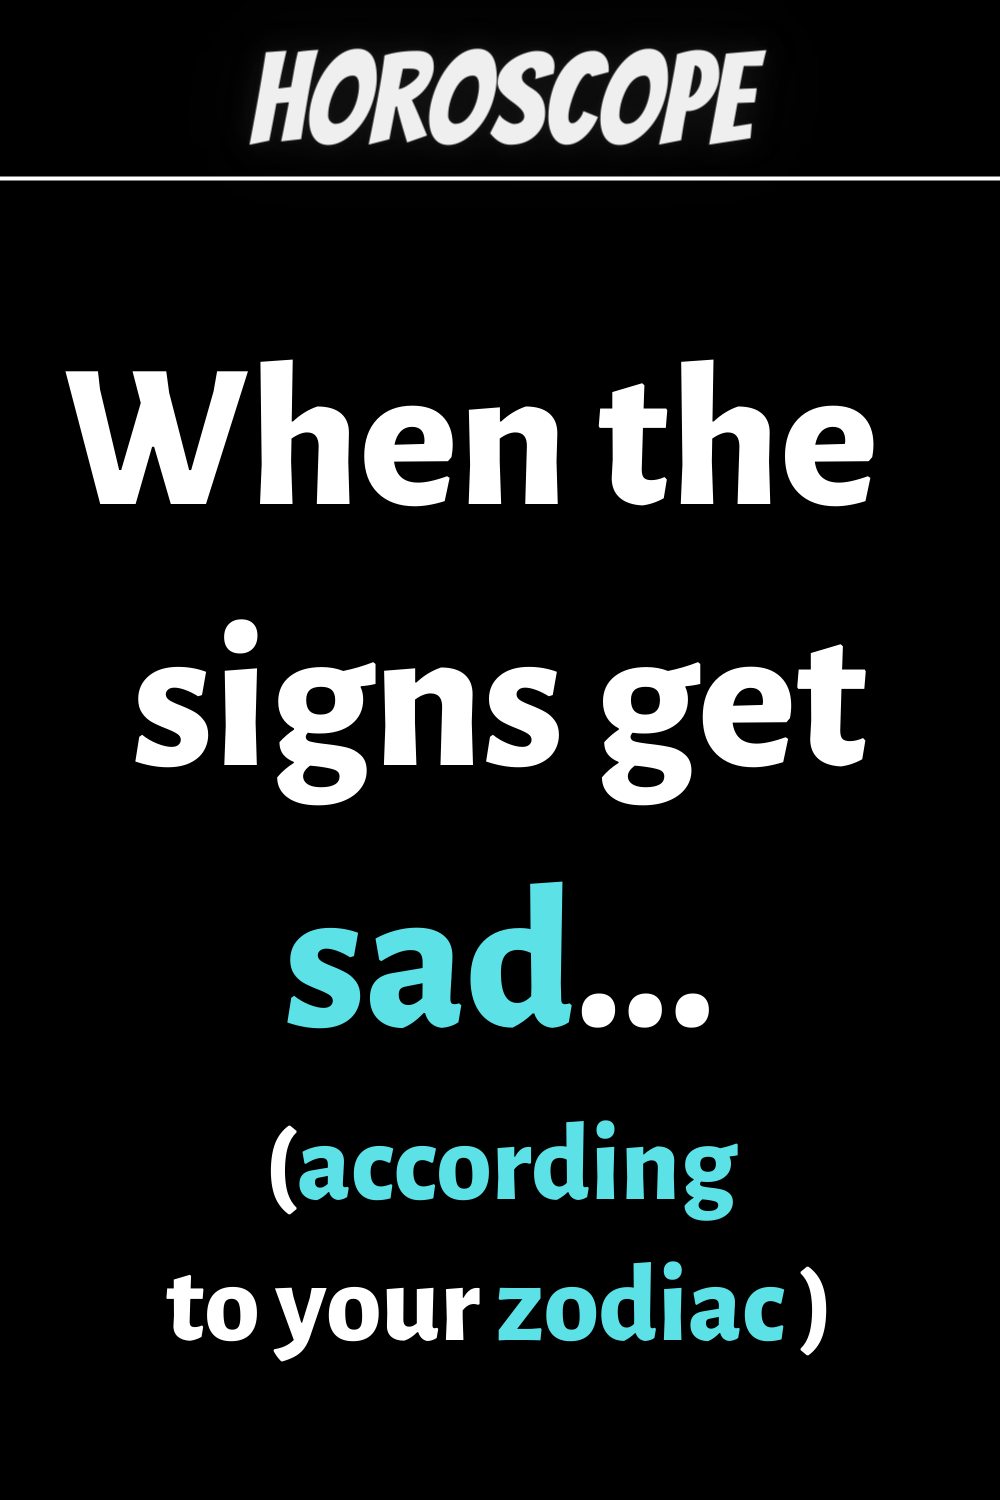 When the zodiac signs get sad